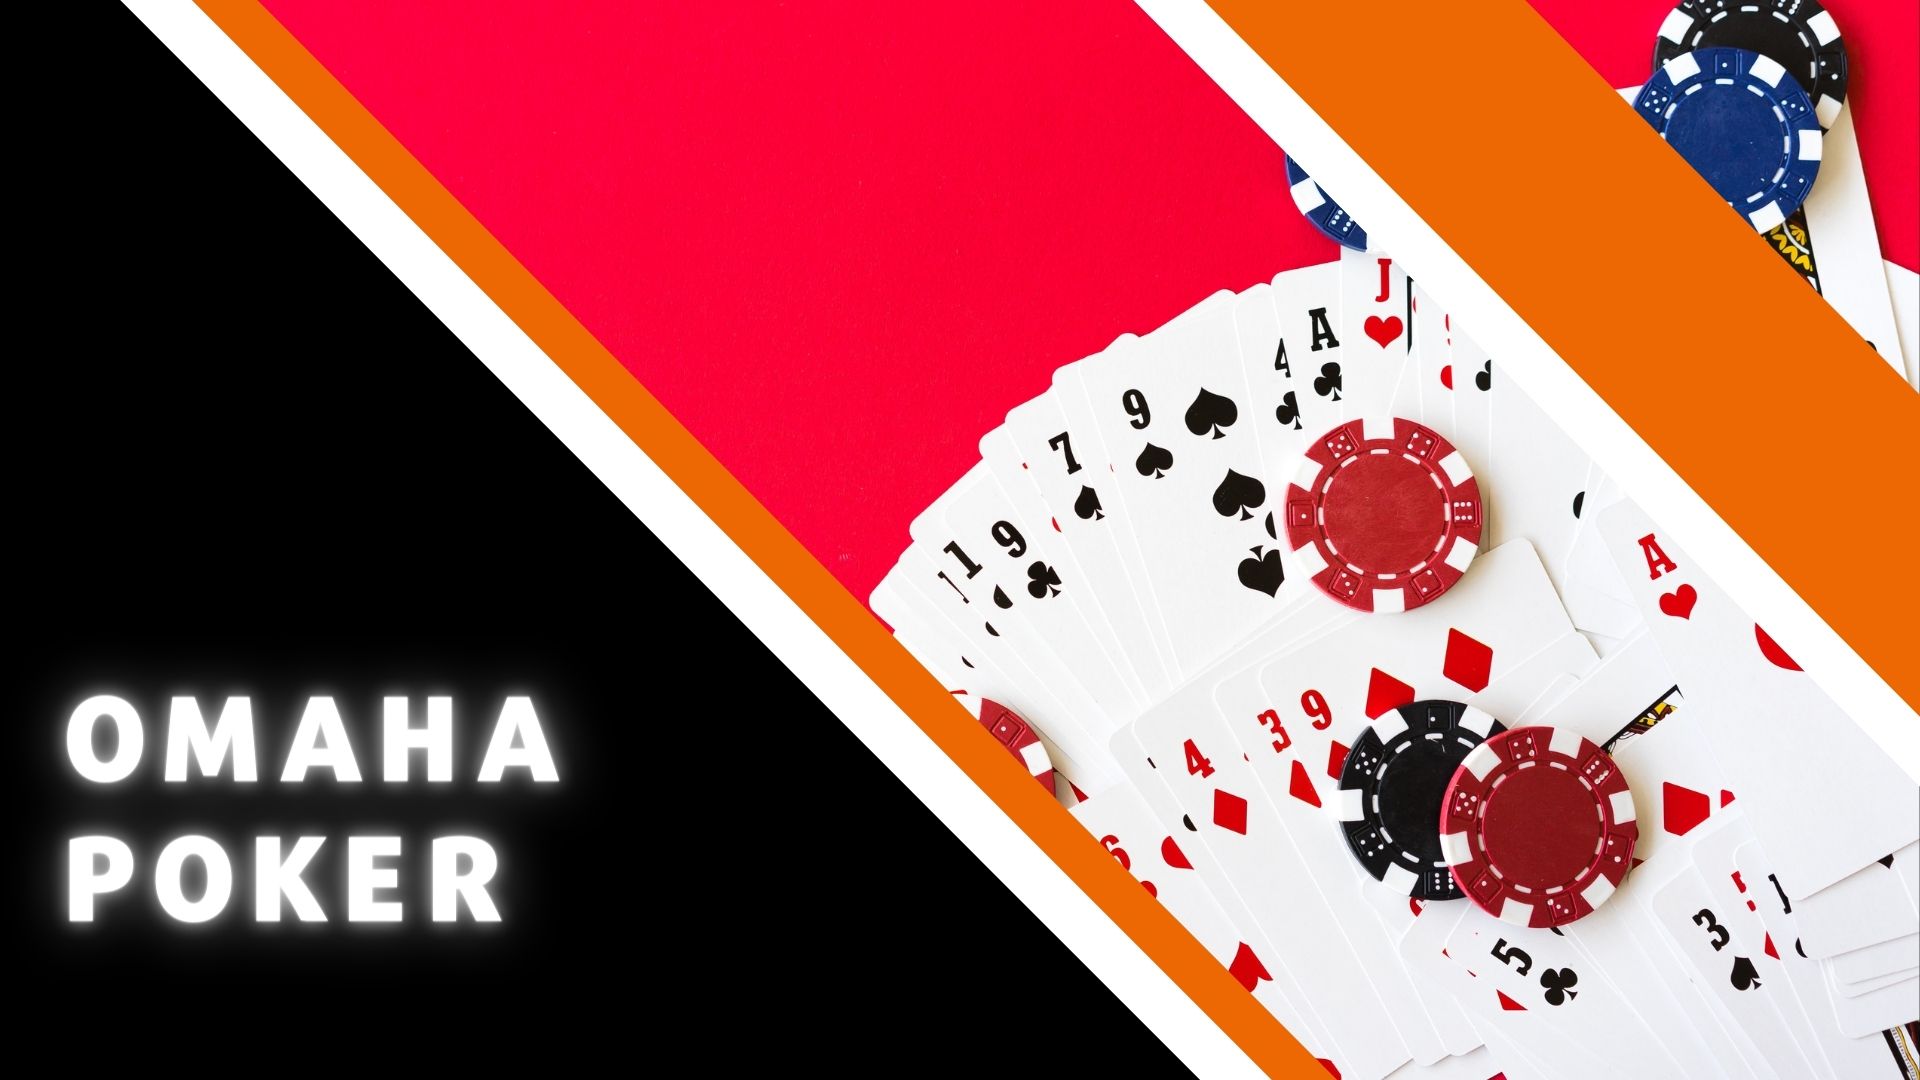 How to play omaha poker